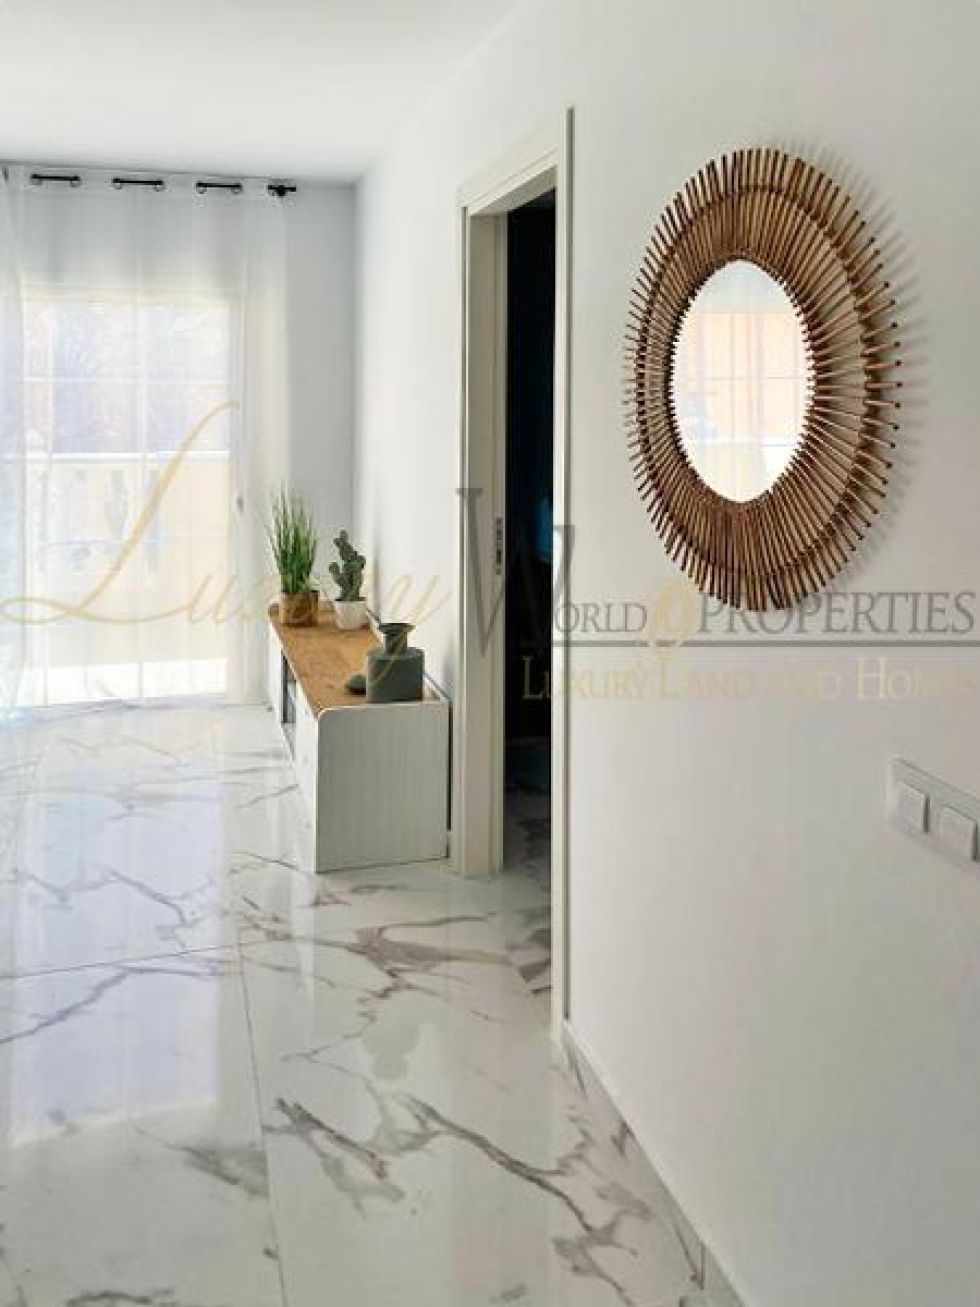 Apartment for sale in  Arona, Spain - LWP4385 Granada Park - Los Cristianos